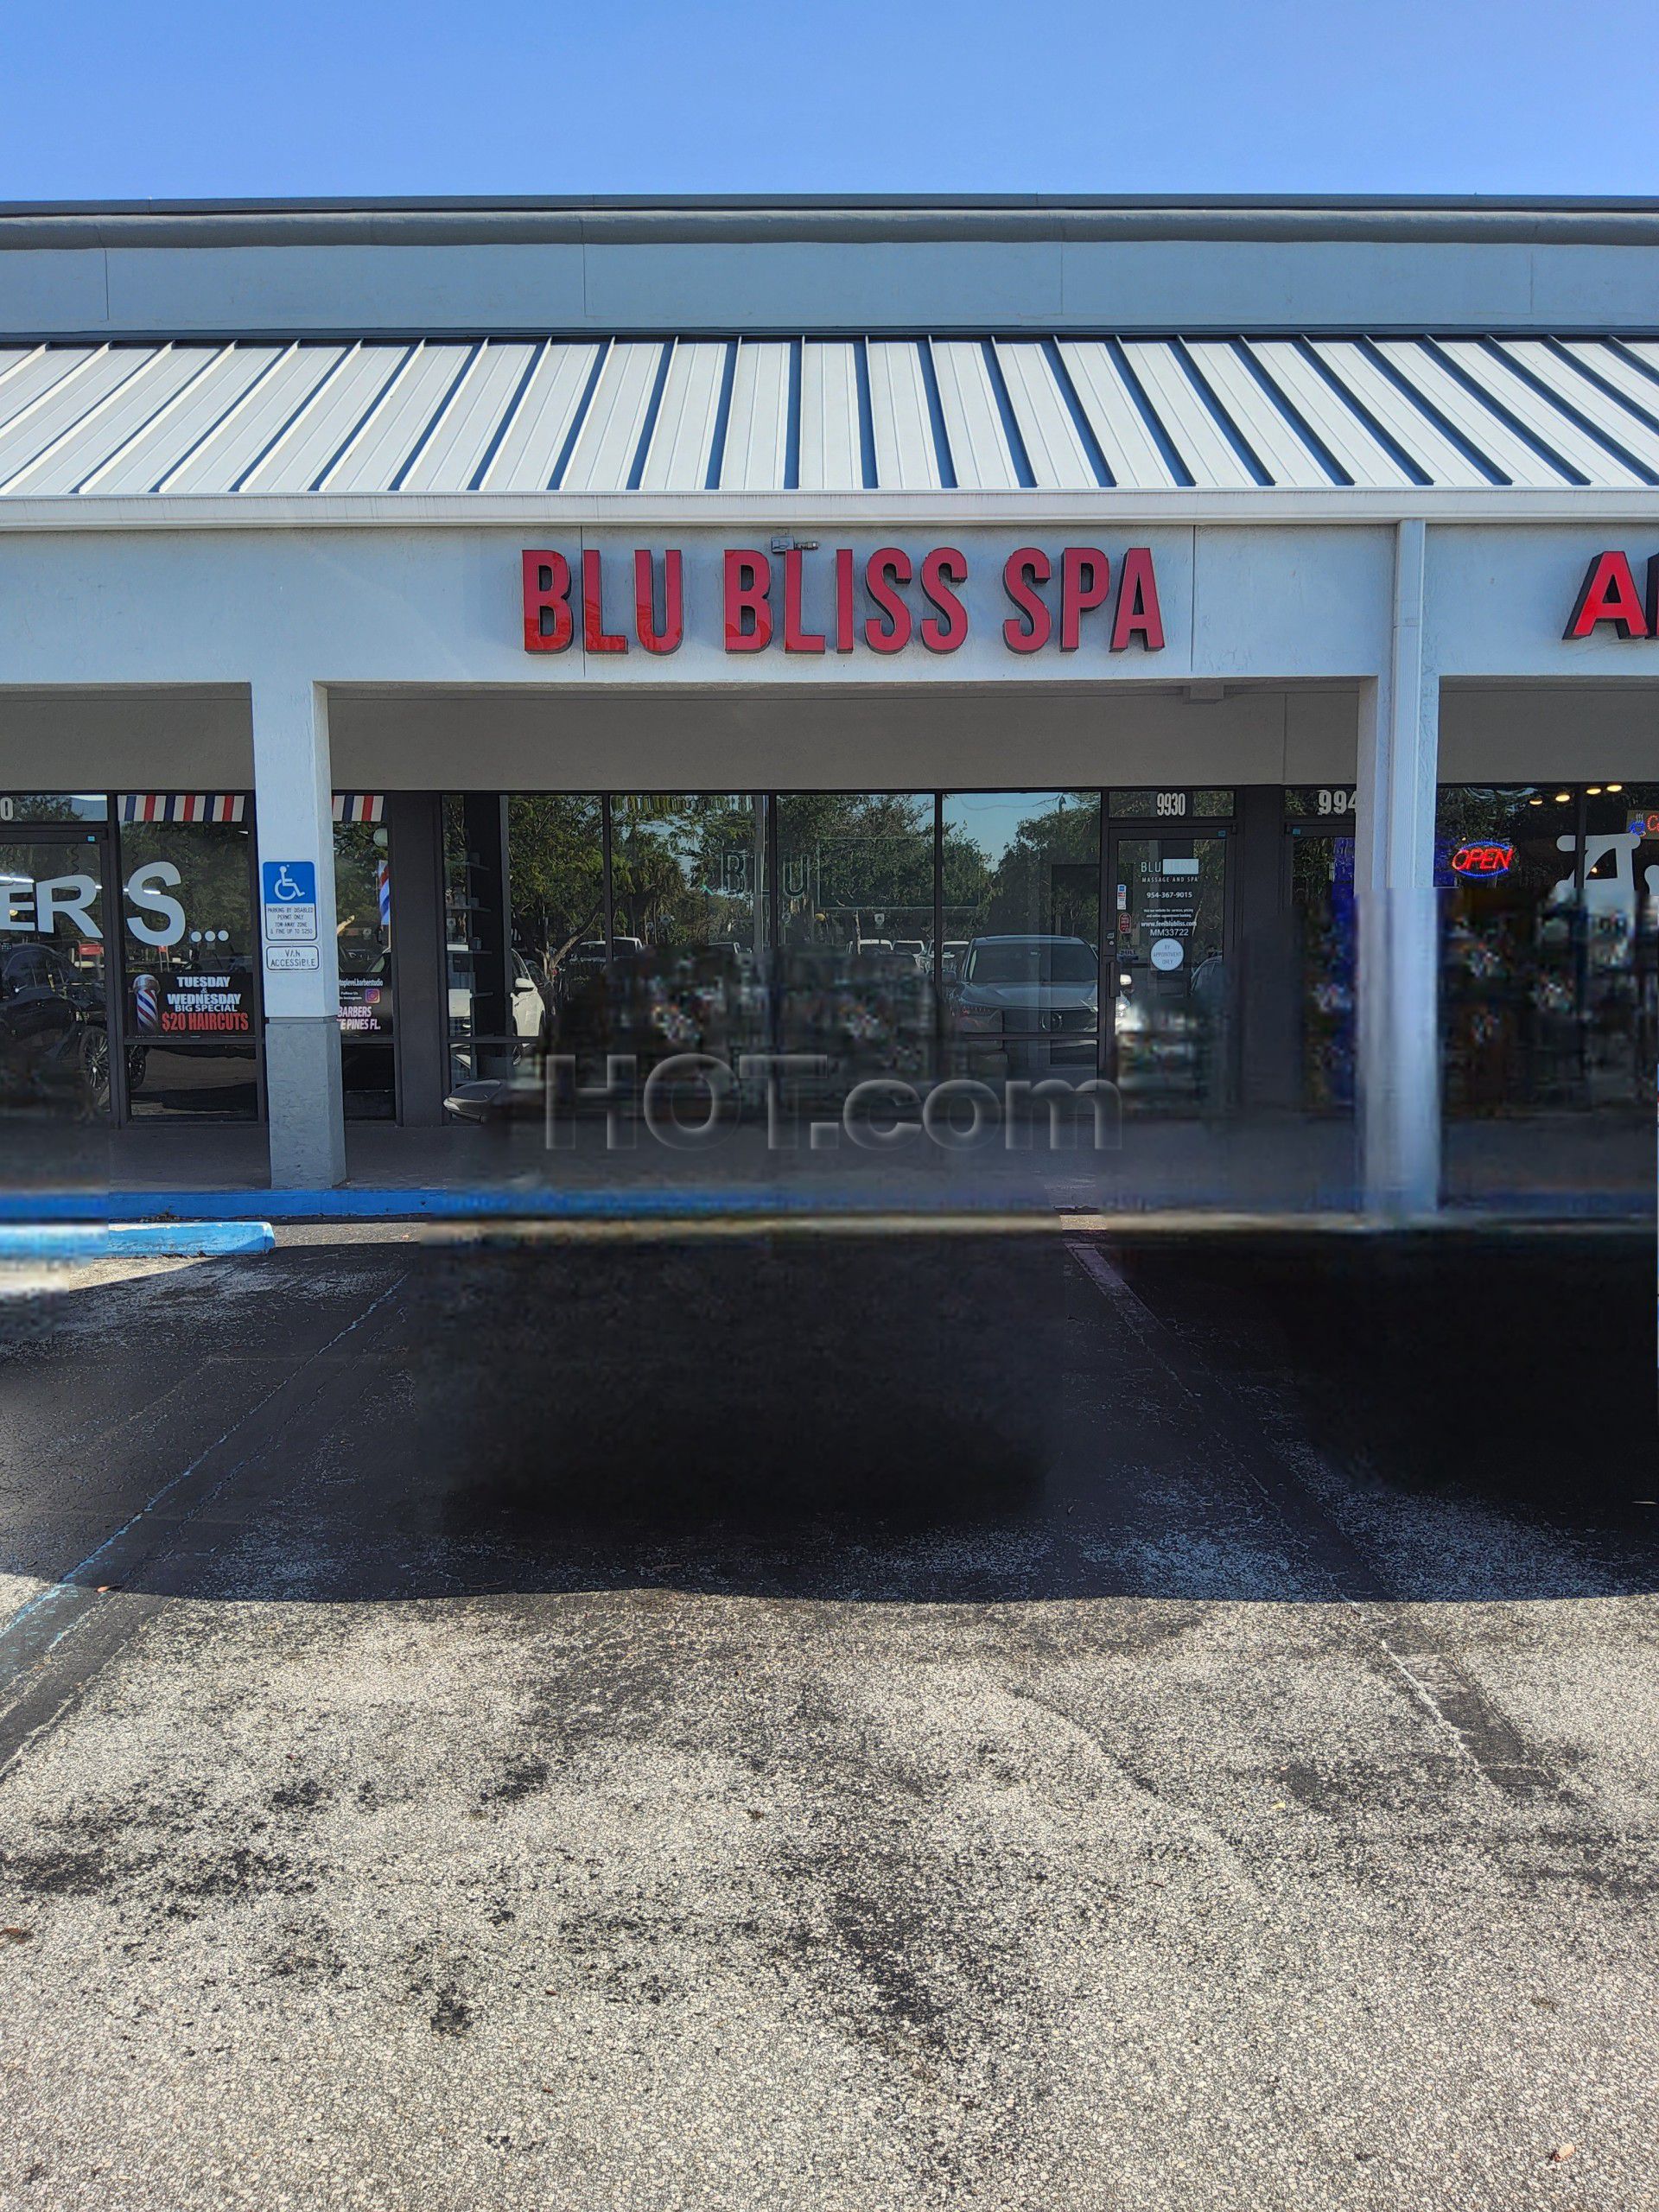 Pembroke Pines, Florida Blu Bliss Massage and Spa